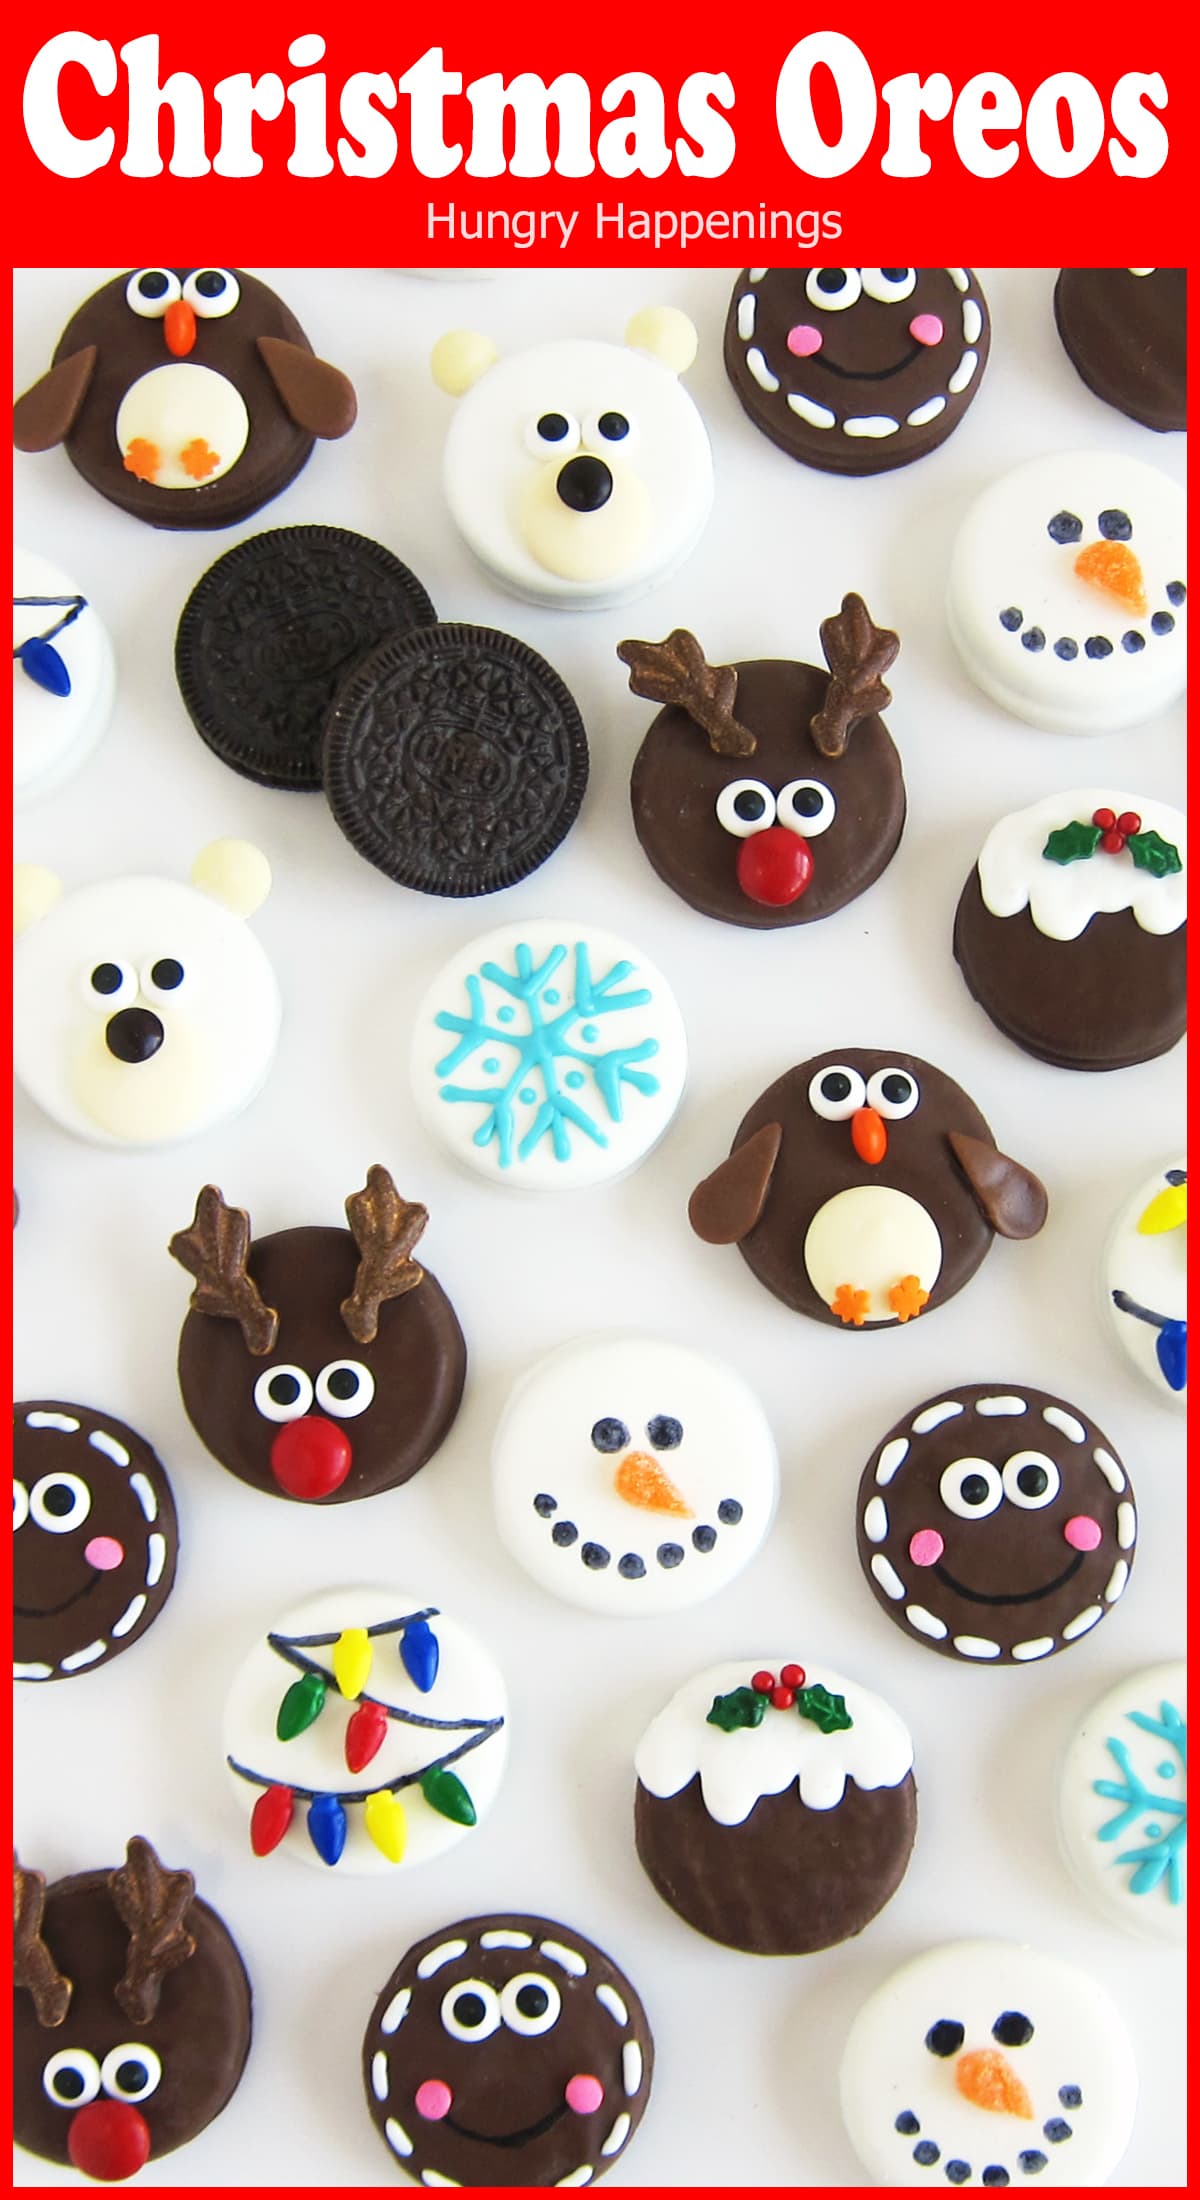 Christmas OREO Cookies including reindeer, gingerbread men, snowflakes, snowmen, penguins, polar bears, and more. 